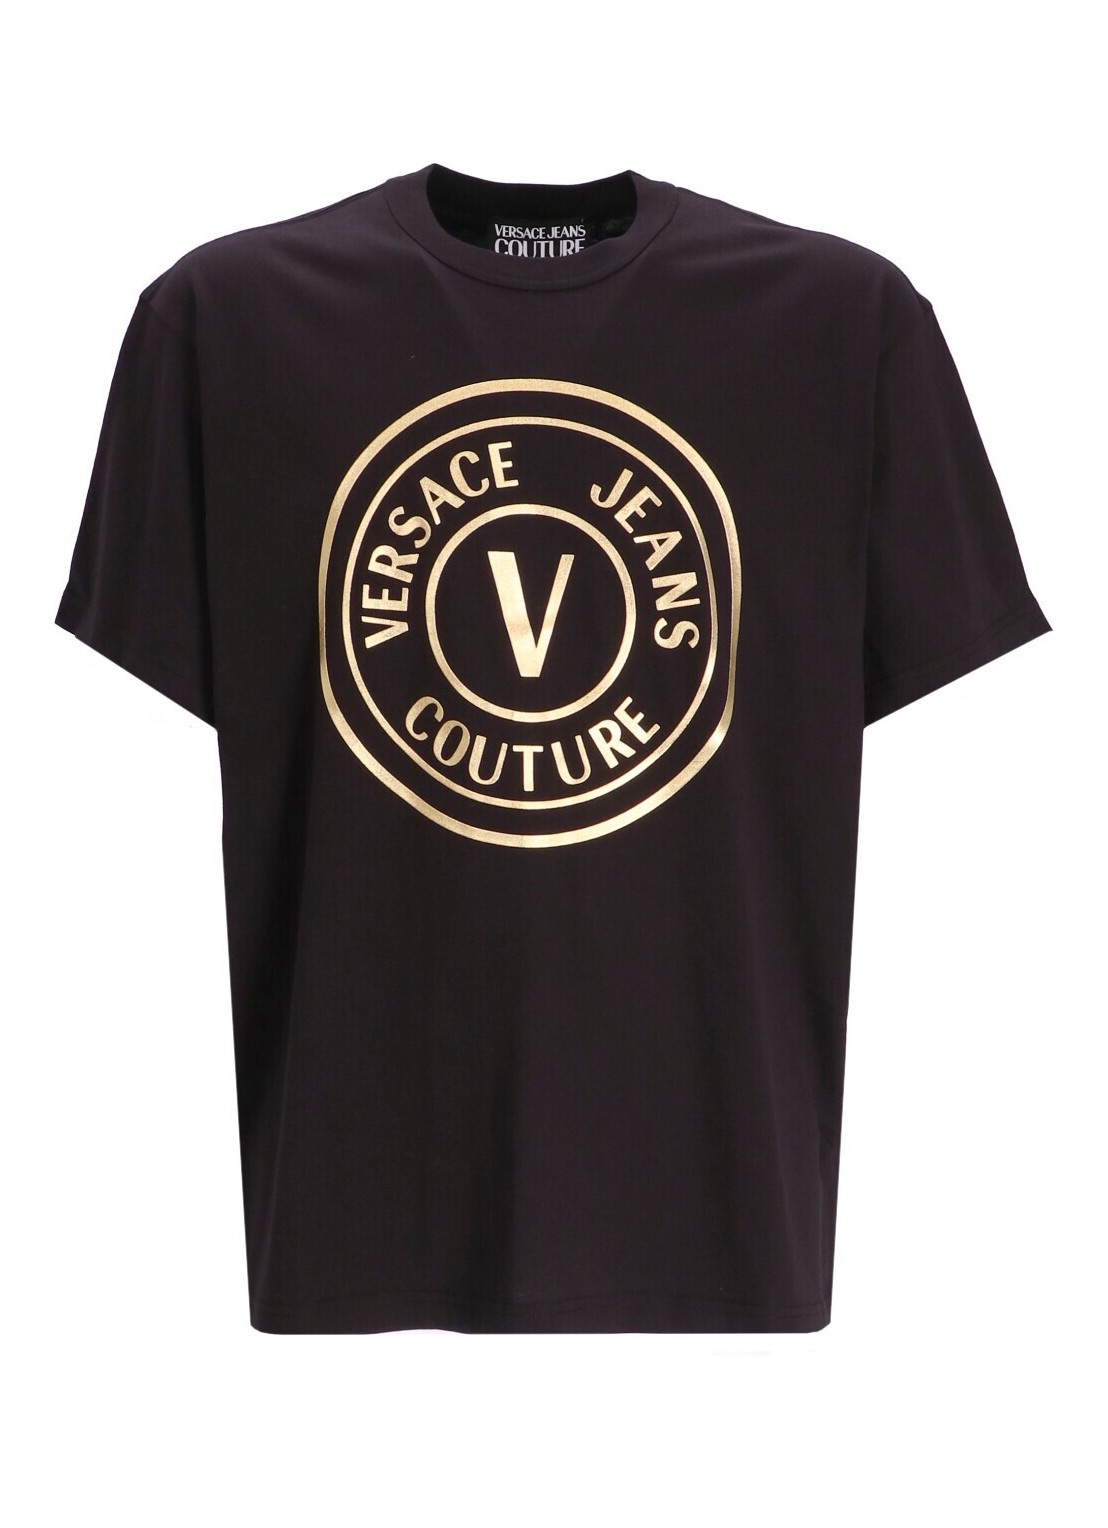 Camiseta versace t-shirt man 75up601 r vemblem tick foil 75gaht05 g89 talla M
 